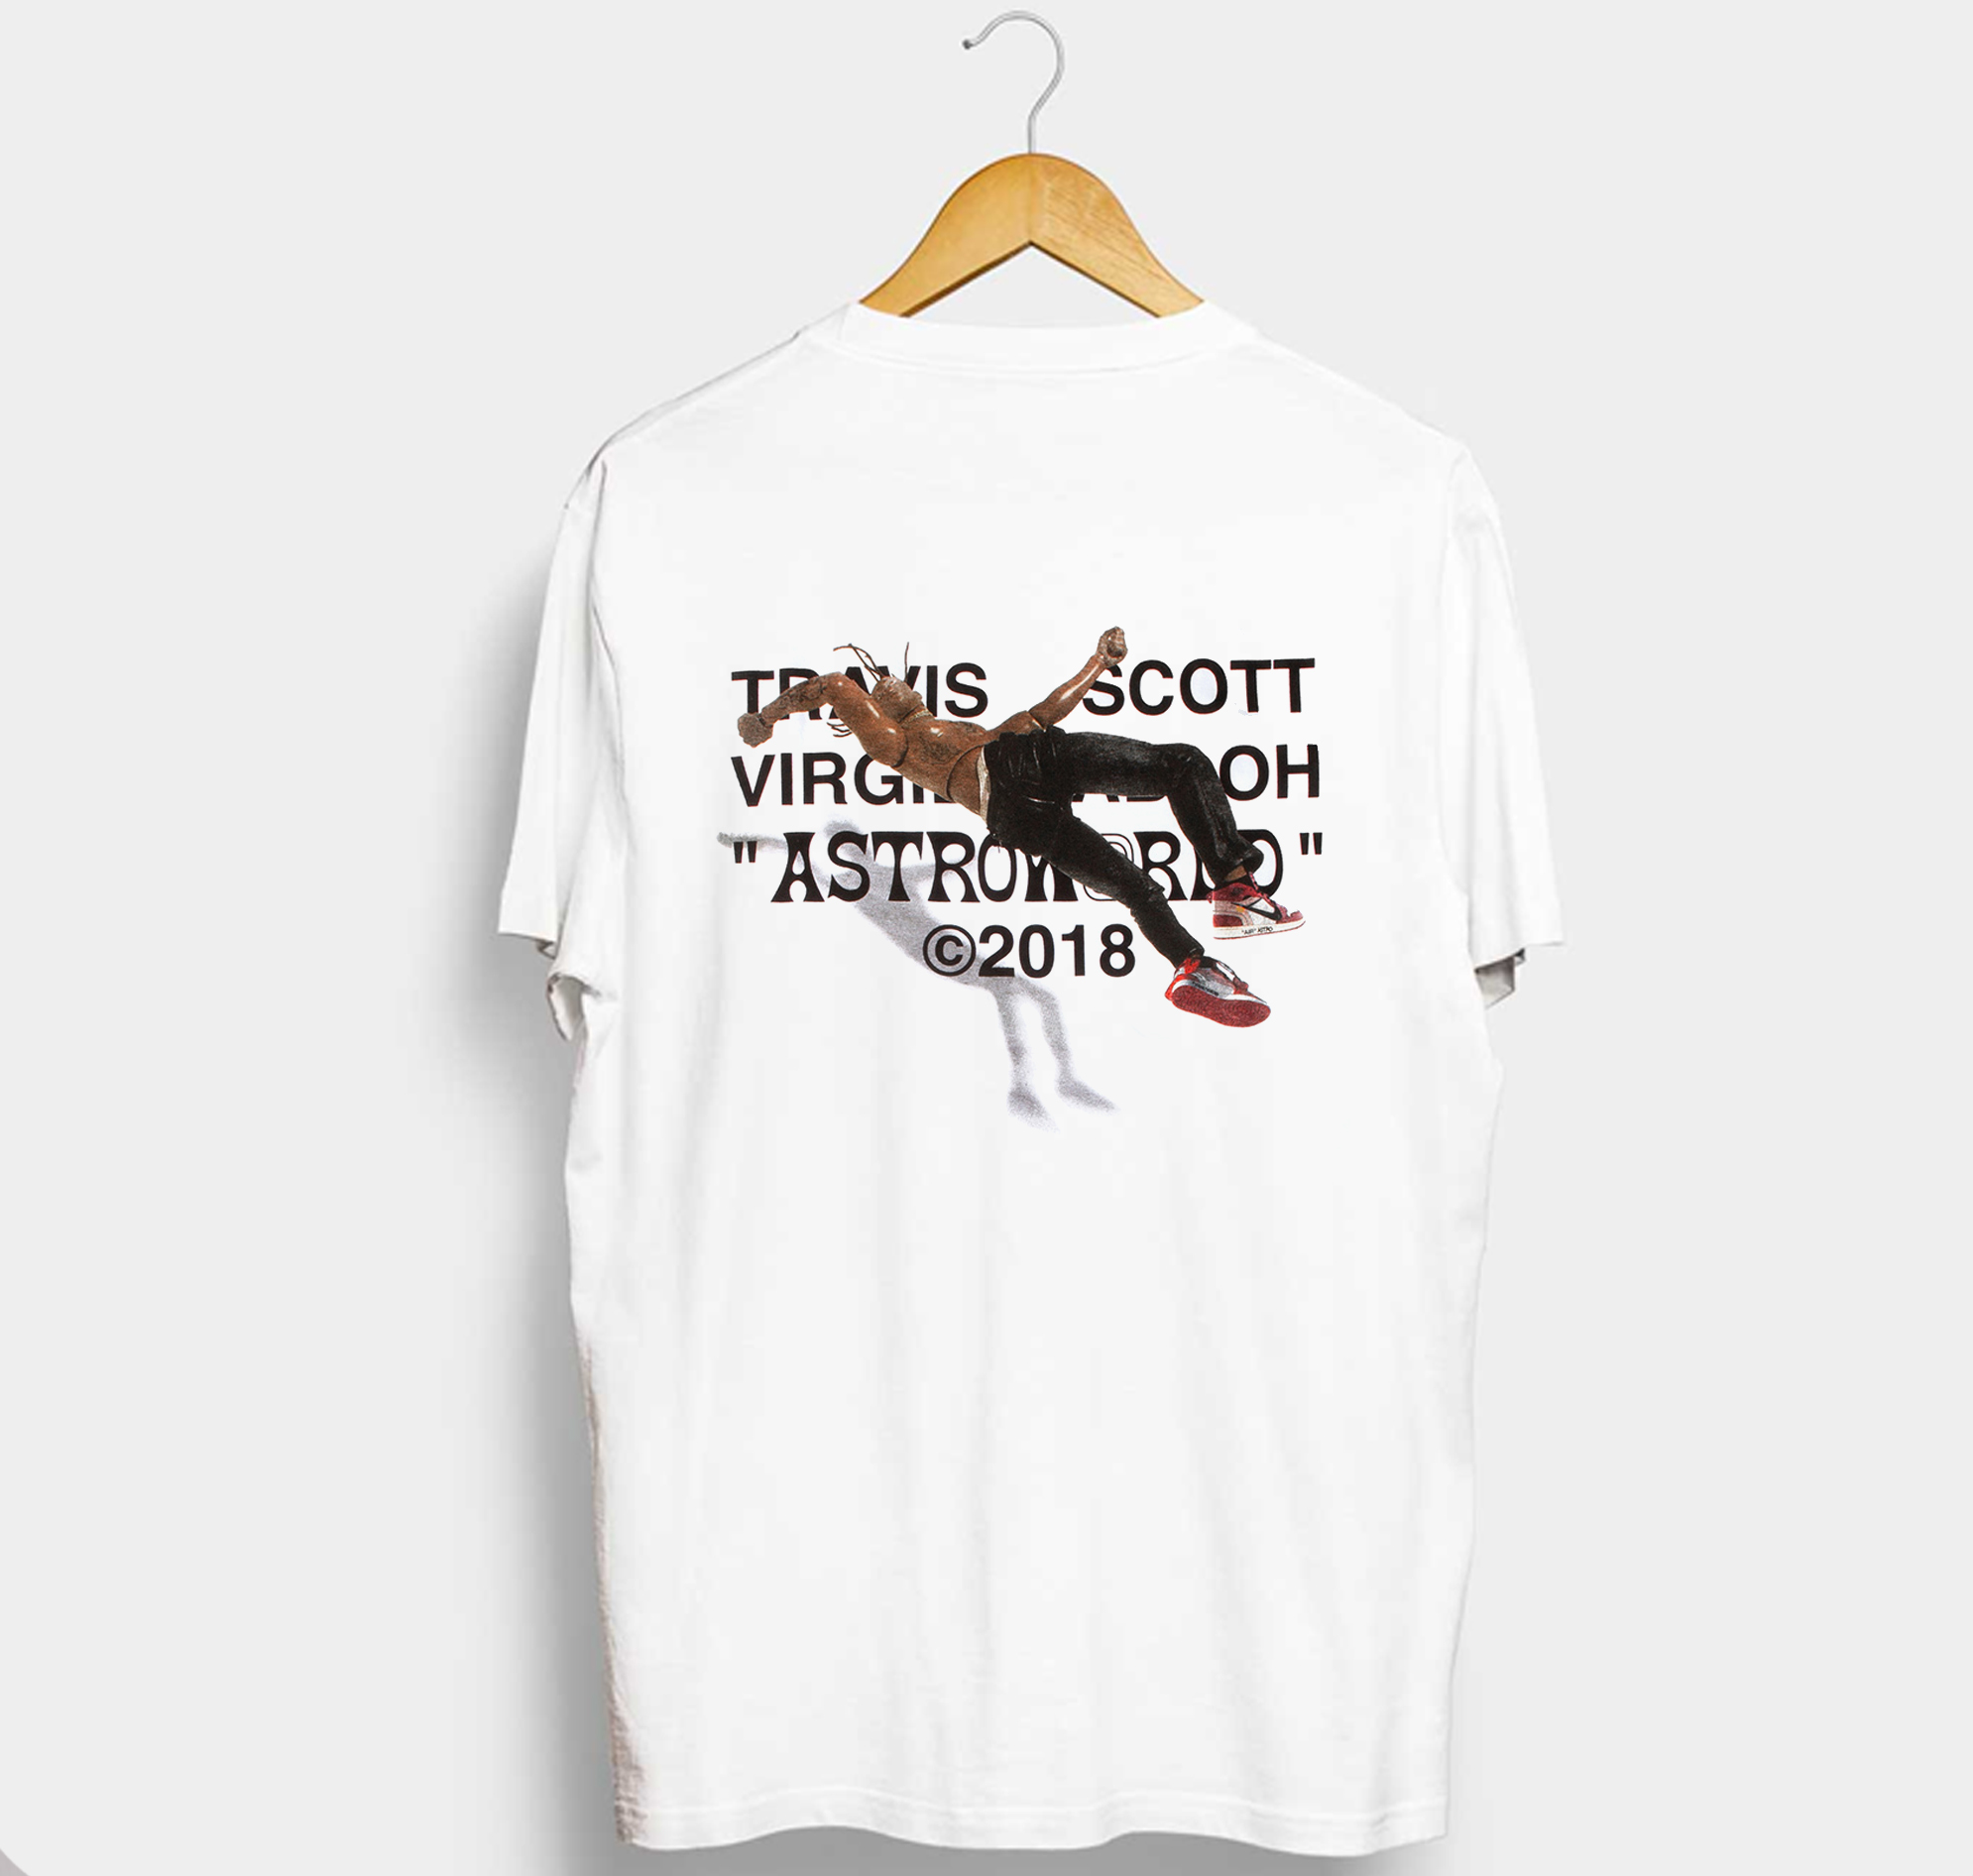 Travis Scott x Virgil Abloh Astroworld NYC T Shirt Back KM